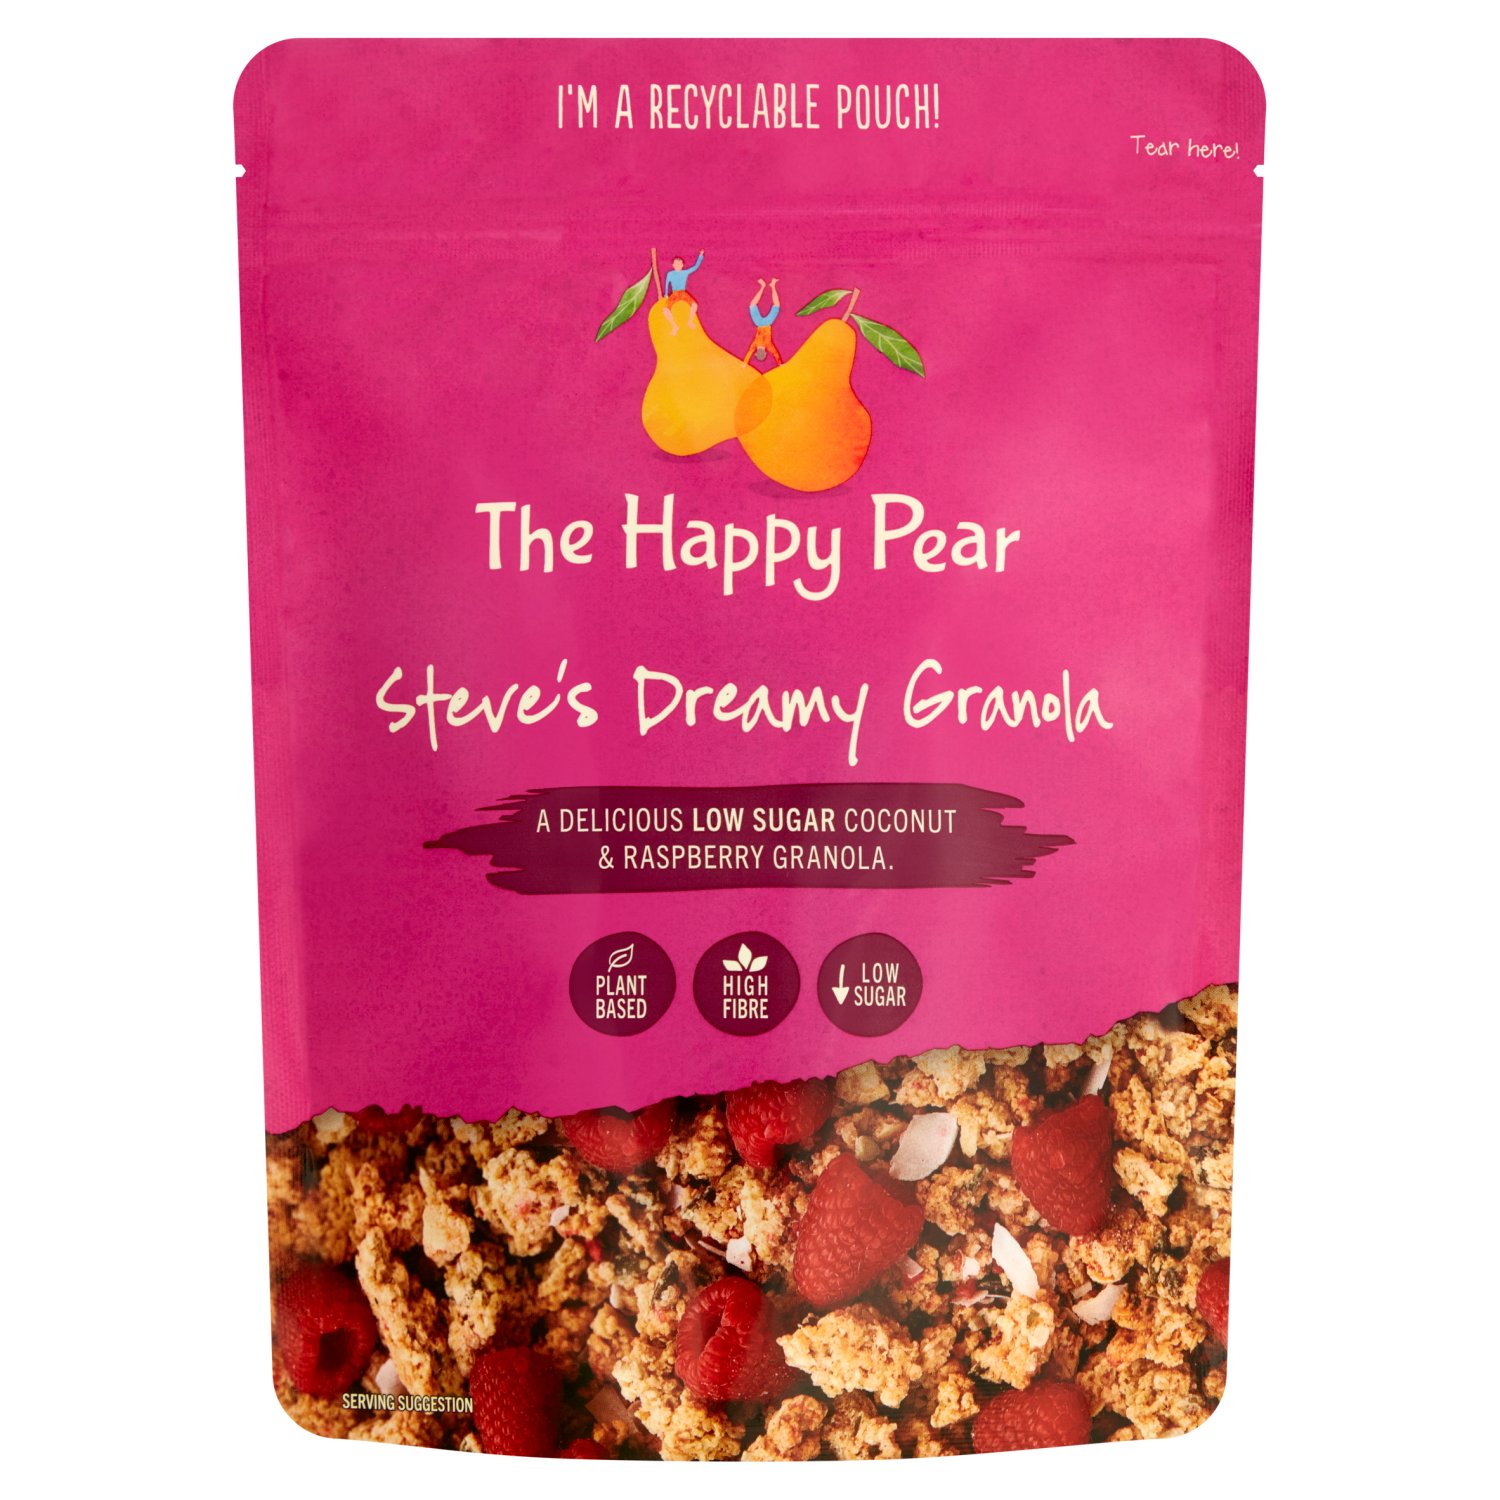 The Happy Pear Steve's Dreamy Granola (350 g)